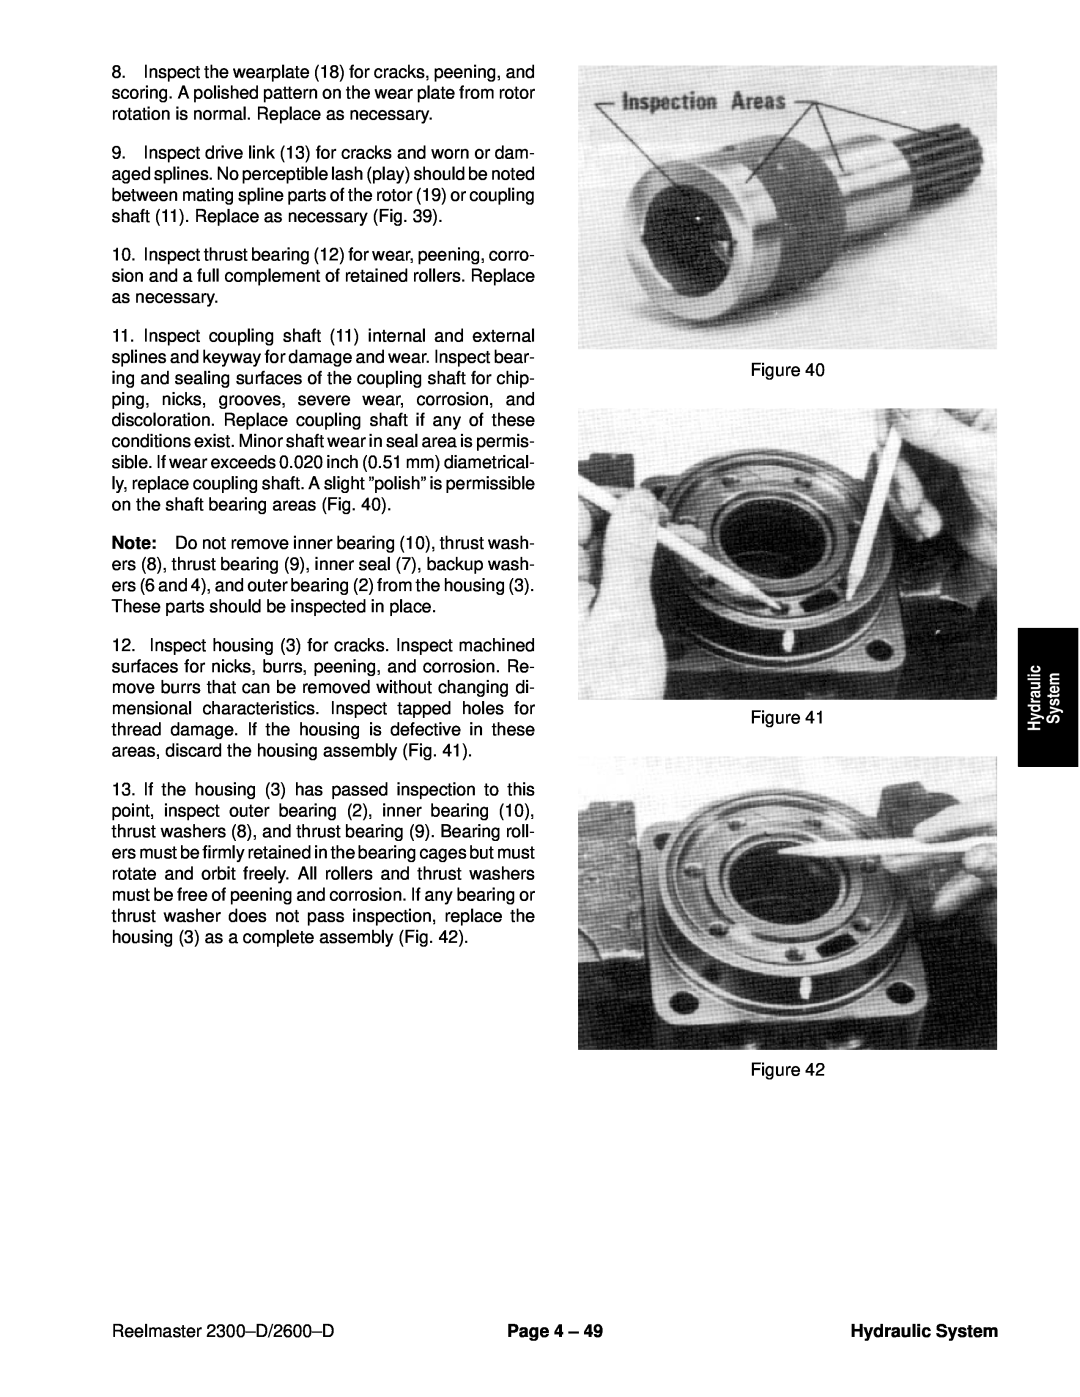 Toro 2600D, 2300-D service manual Reelmaster 2300±D/2600±D, Page 4 ±, Hydraulic System 